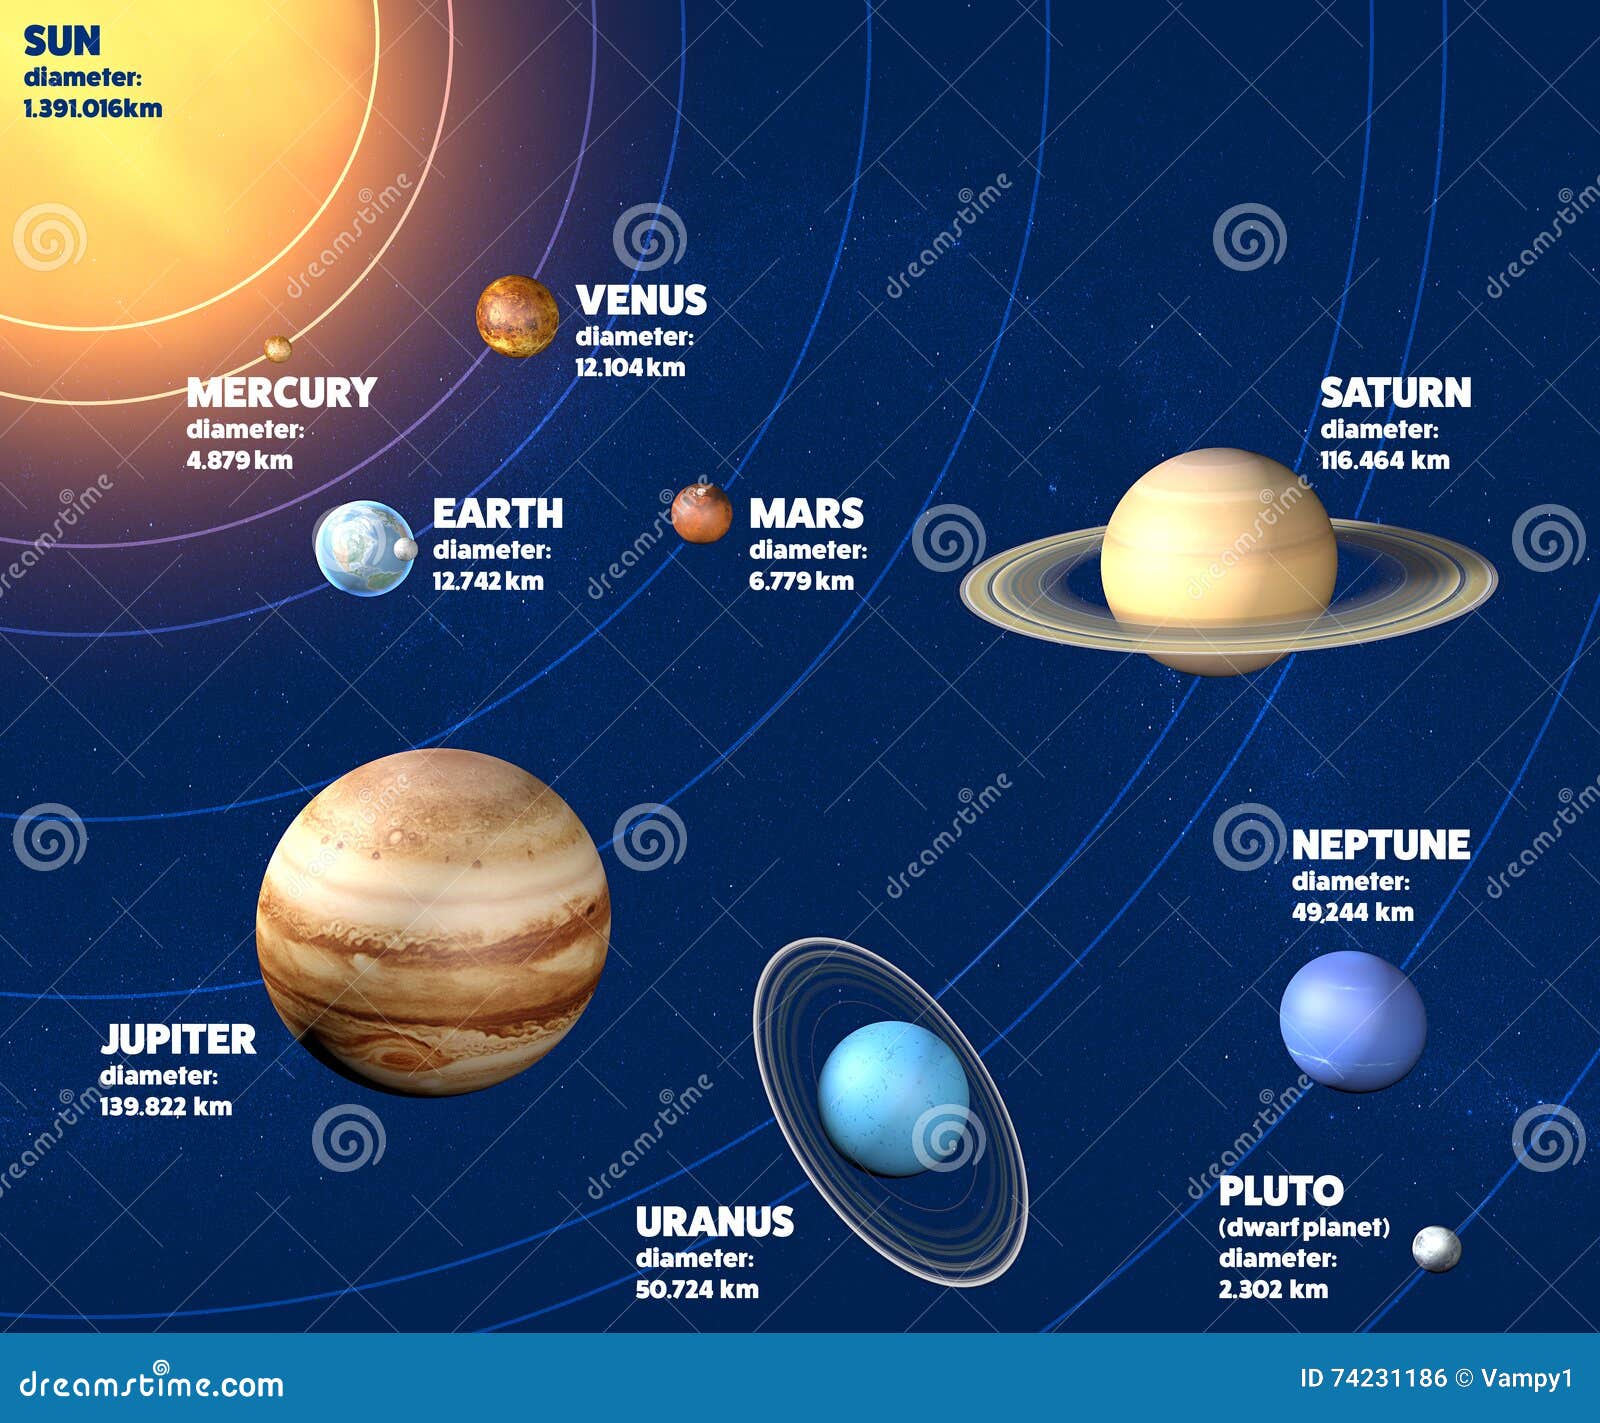 solar system planets diameter